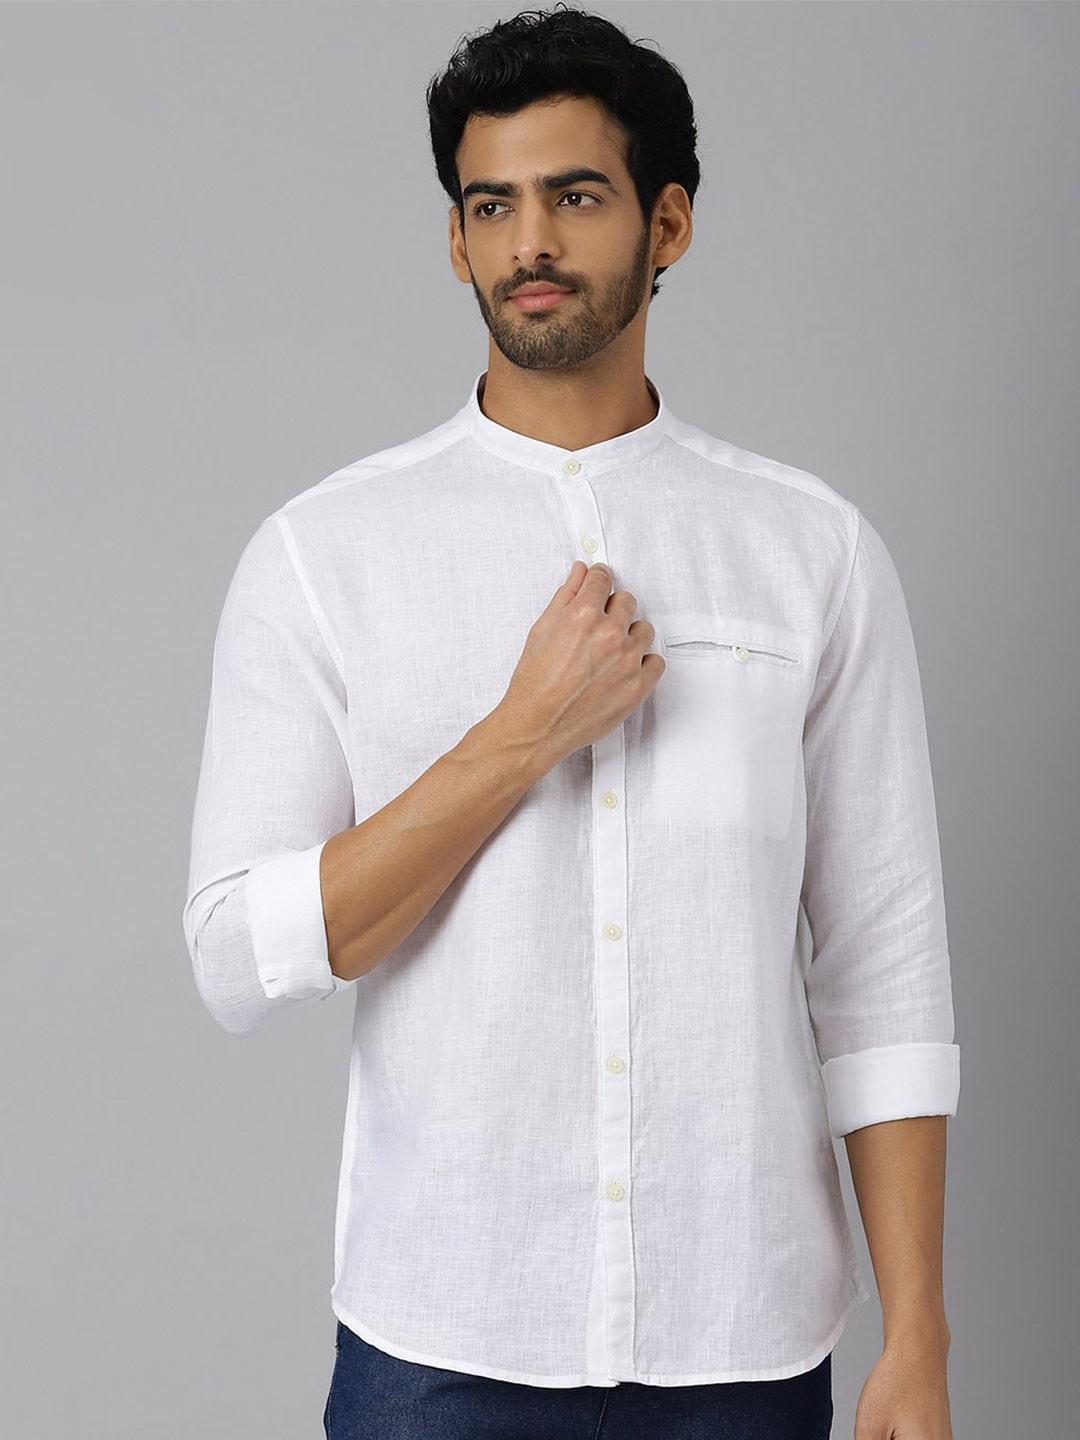 kingdom of white opaque cotton casual shirt